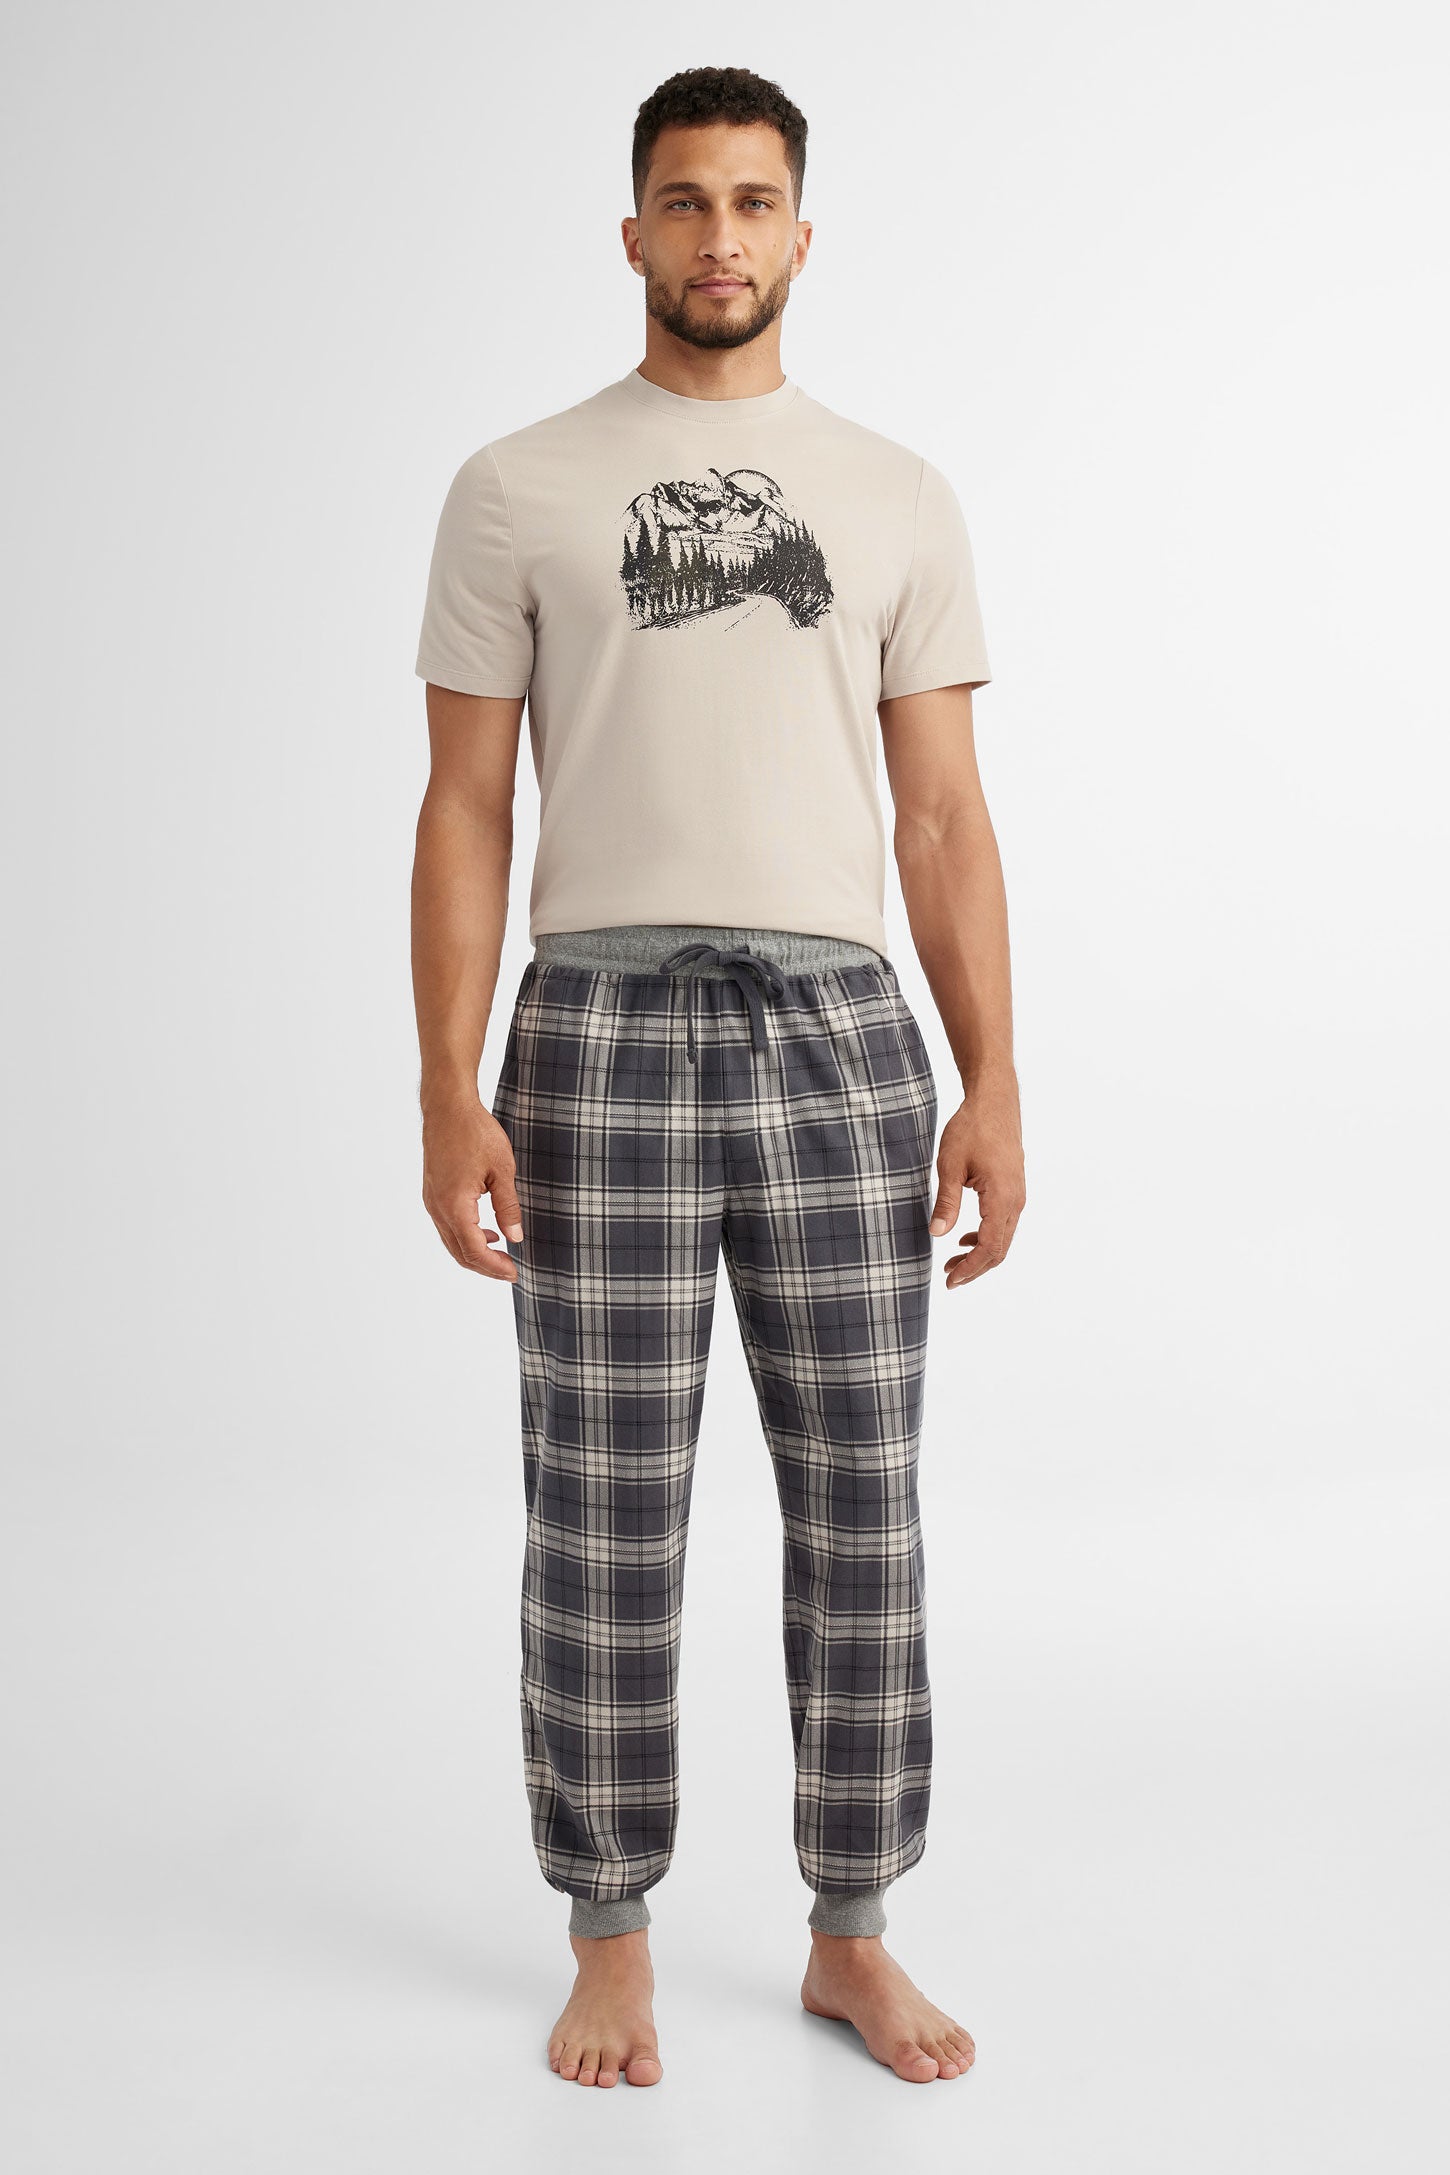 Pantalon jogger pyjama  - Homme && CHAMEAU